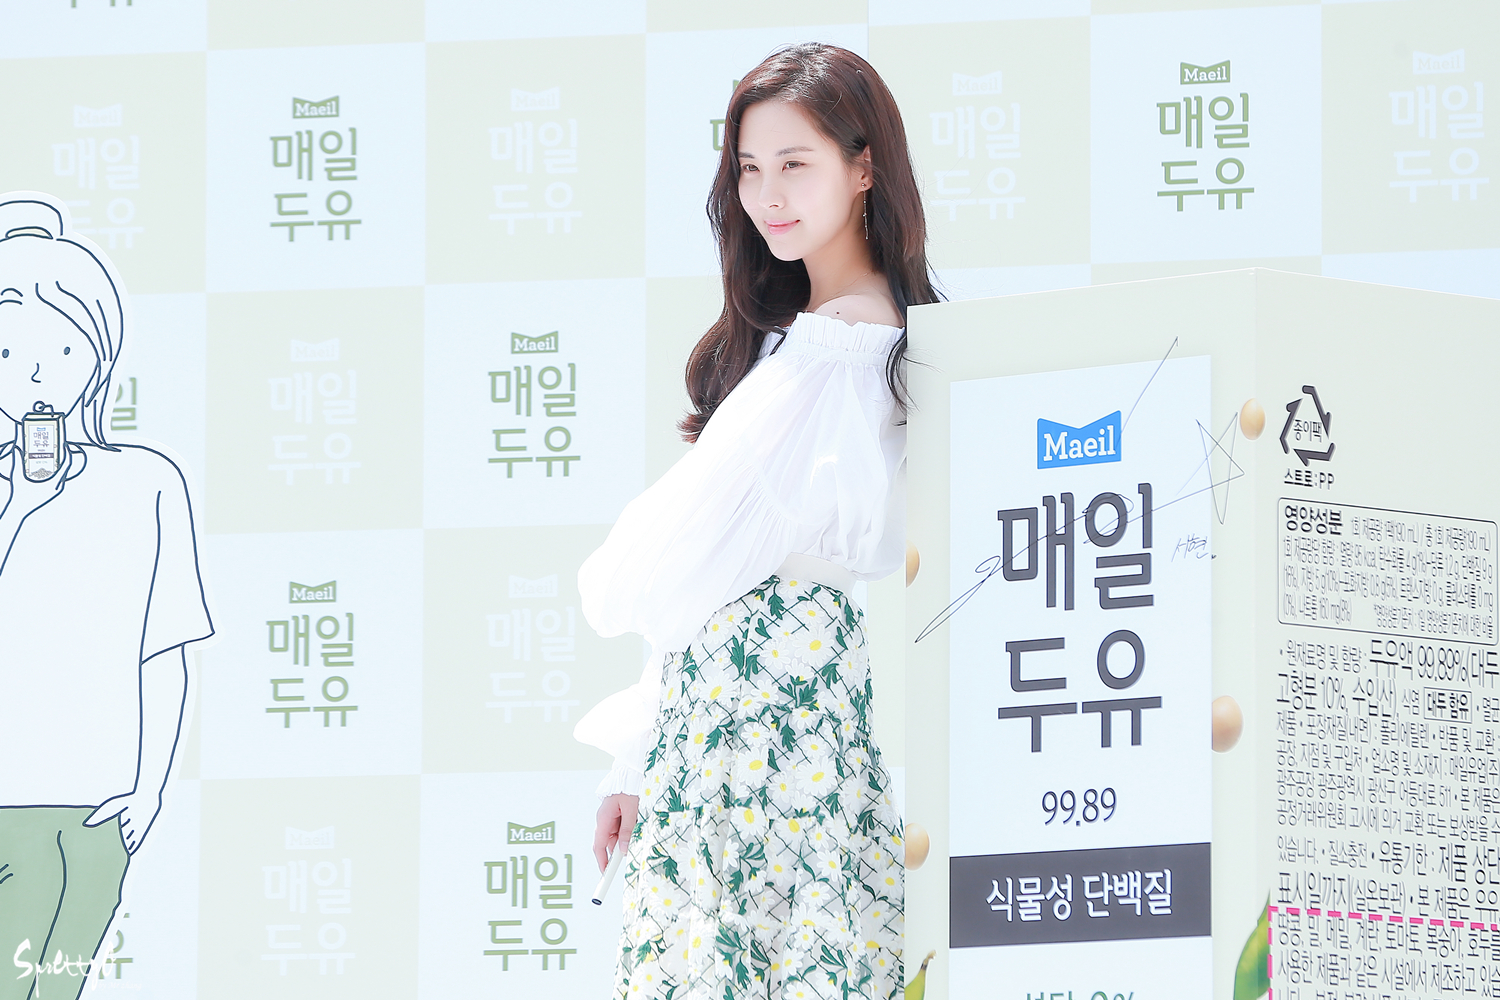  [PIC][03-06-2017]SeoHyun tham dự sự kiện “City Forestival - Maeil Duyou 'Confidence Diary'” vào chiều nay - Page 2 27569C4759329B9339FC3F